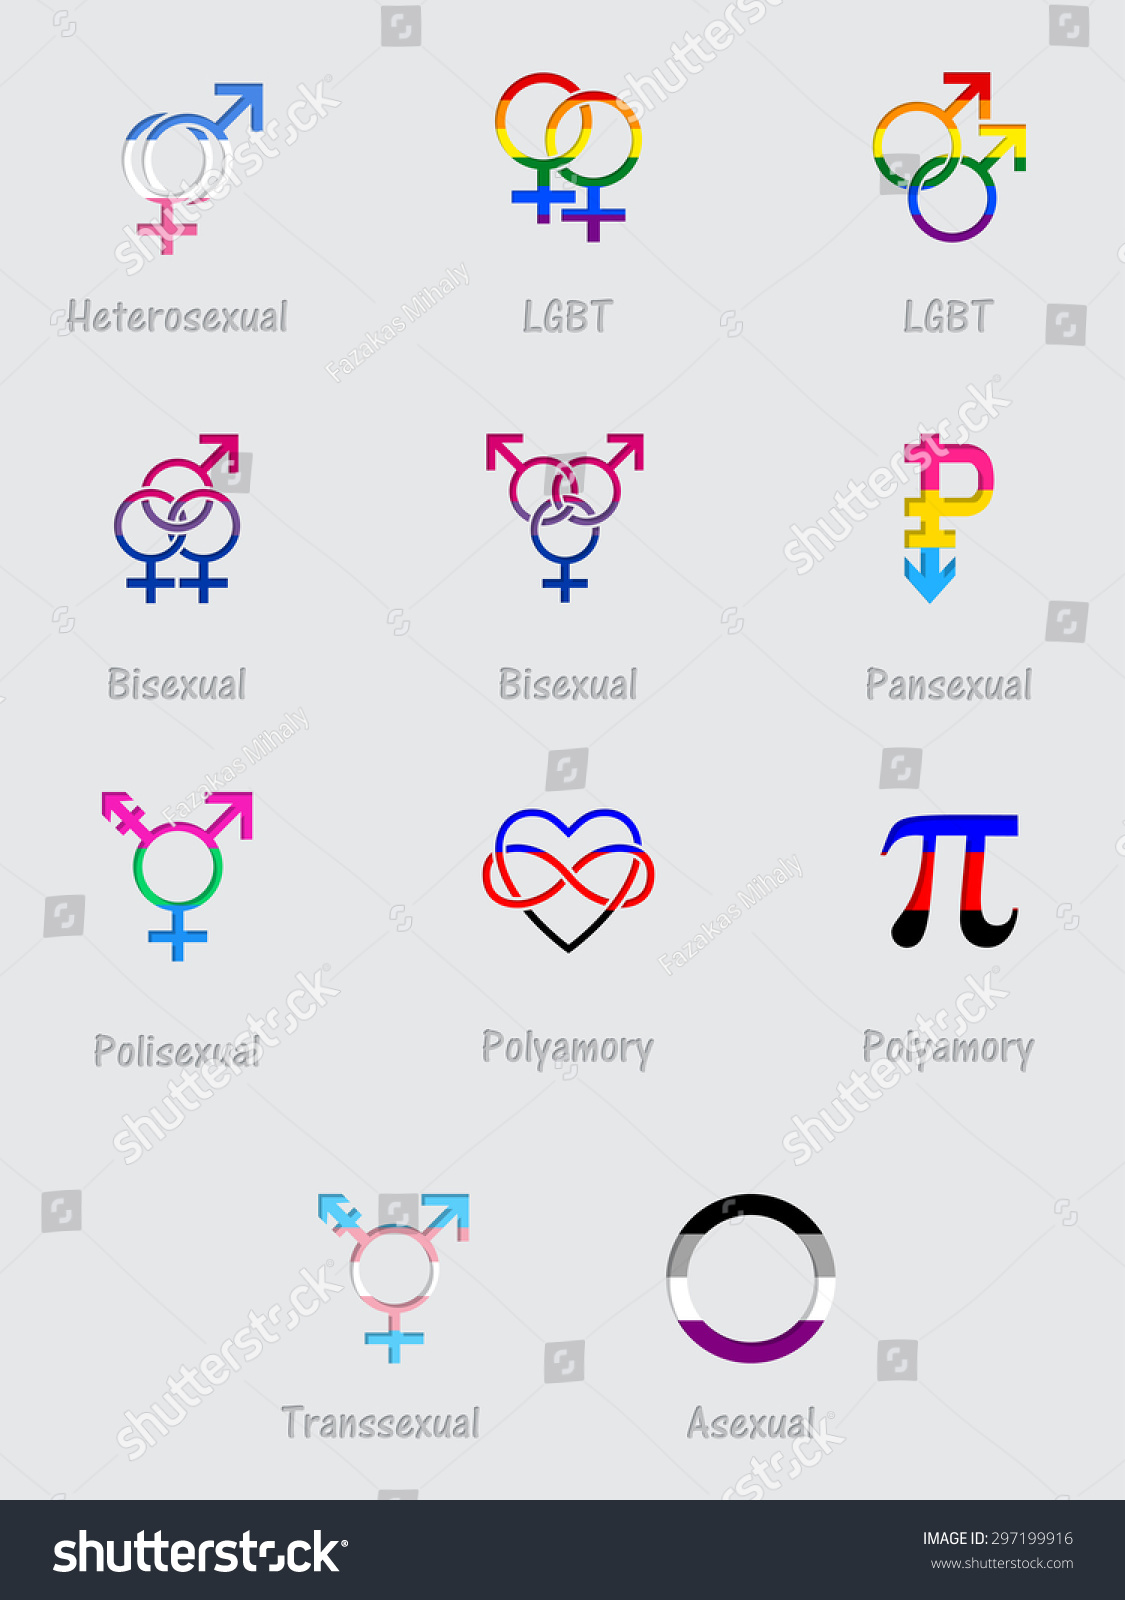 Sexual Orientation Symbols Flags On Light เวกเตอร์สต็อก ปลอดค่า